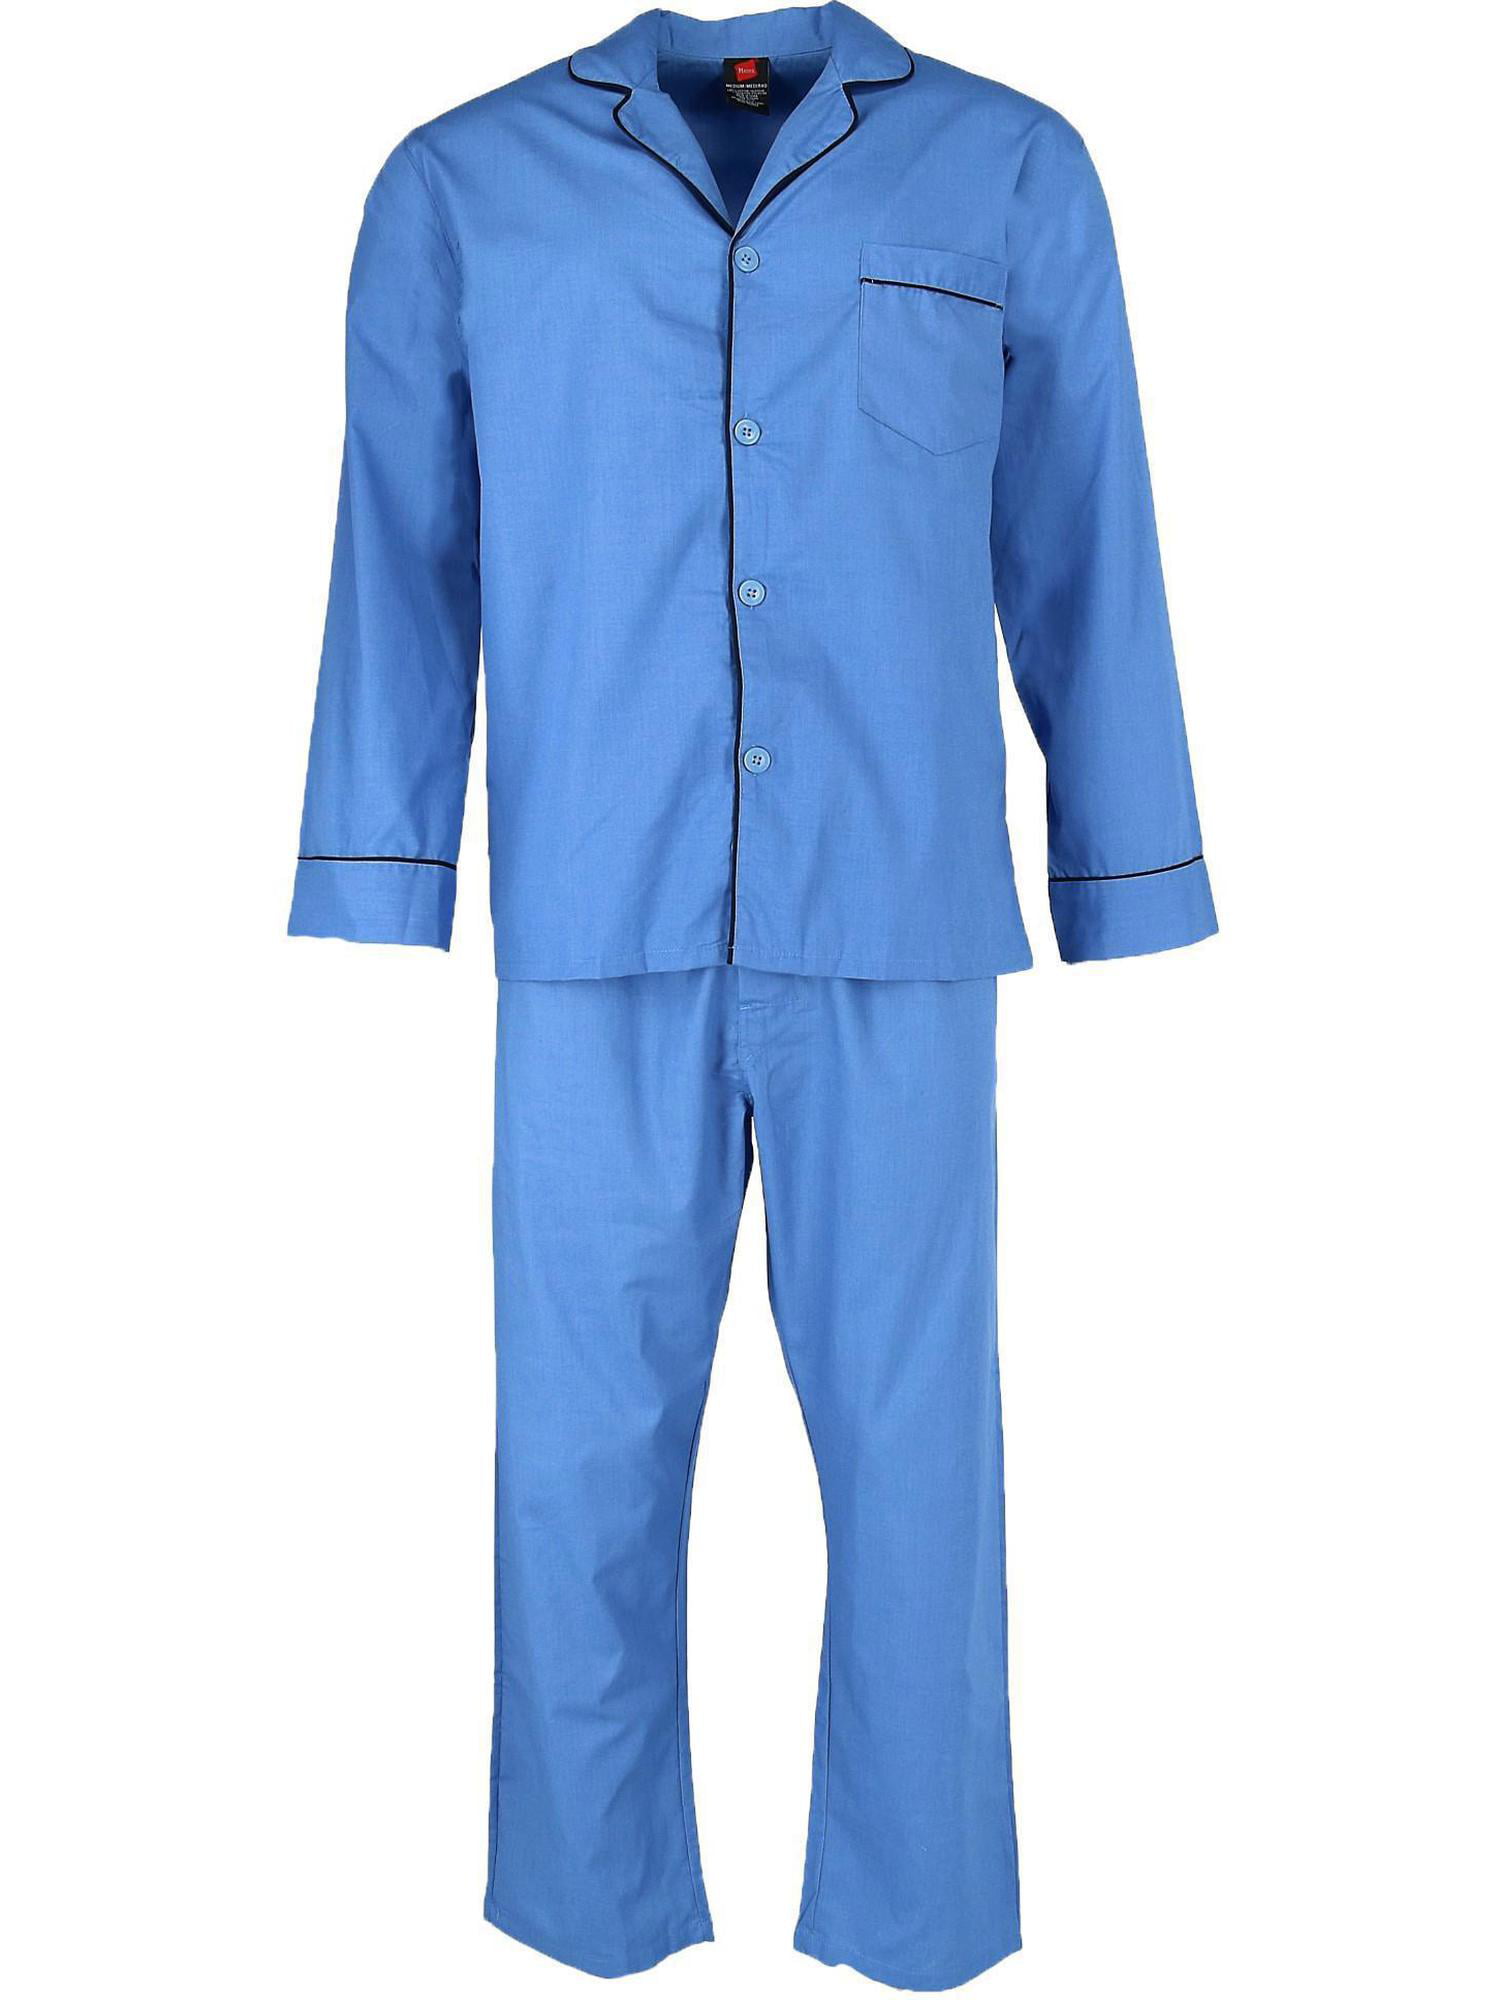 Geoffrey Beene Men's Long Sleeve Broadcloth Pajama Set Choose SZ/Color 